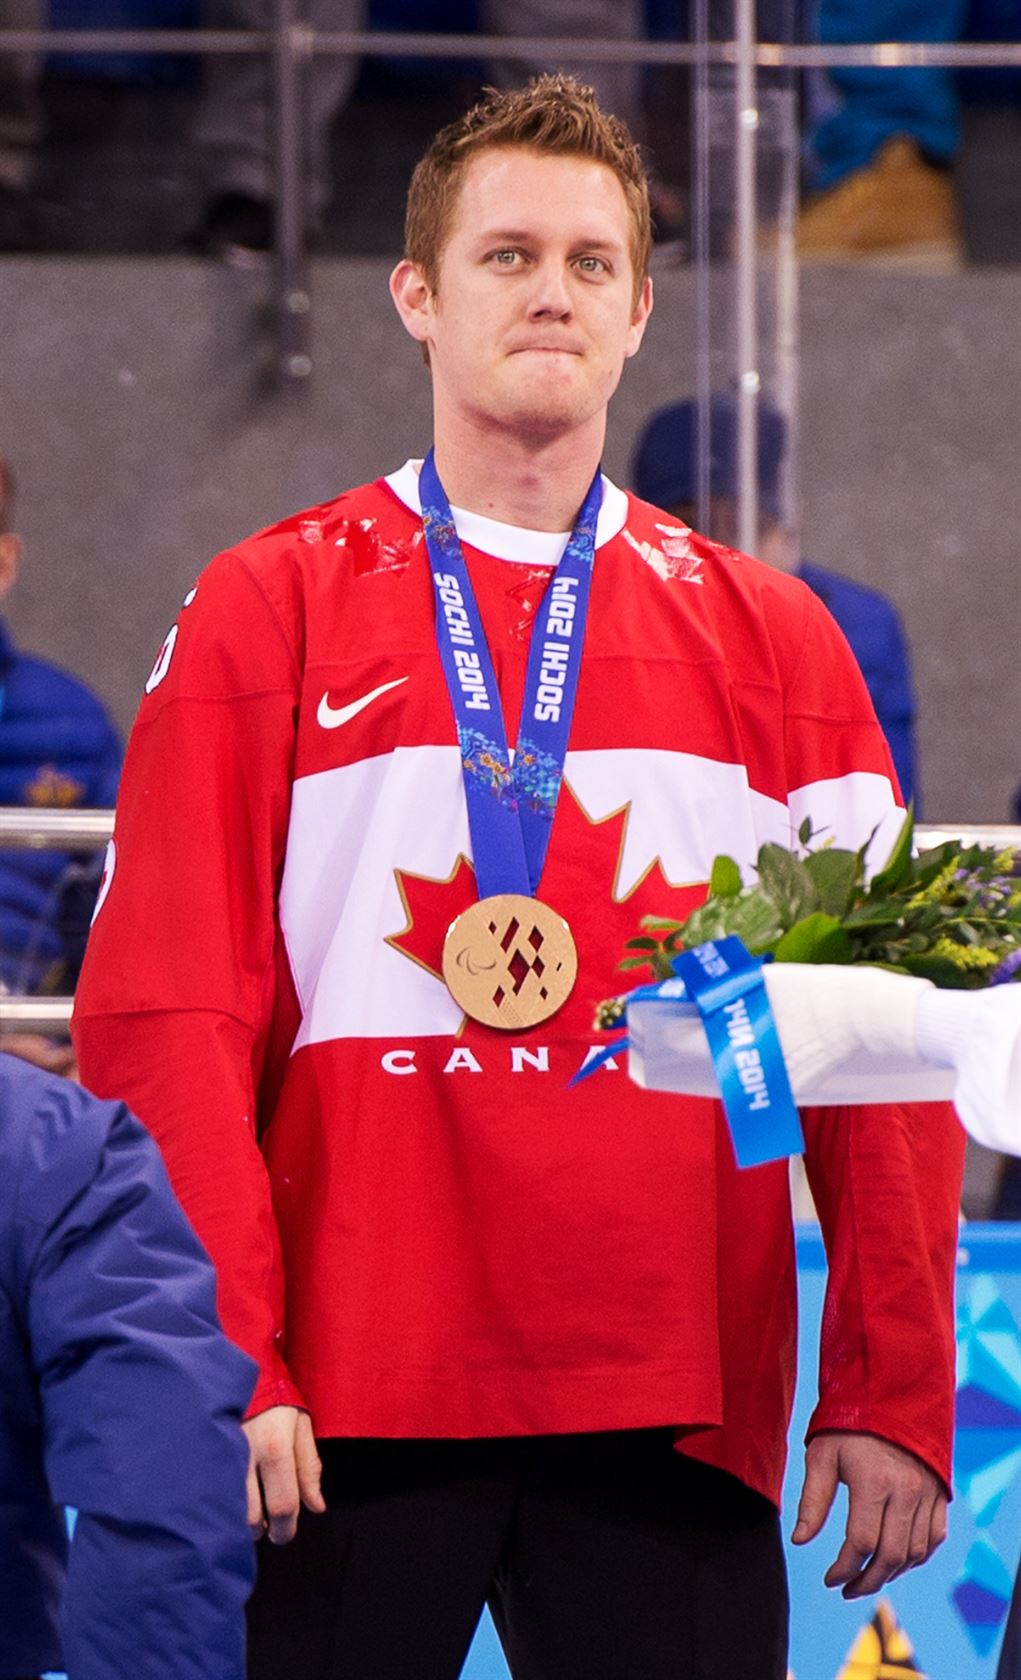 Dominic Larocque receives his Bronze medal in Sledge Hockey